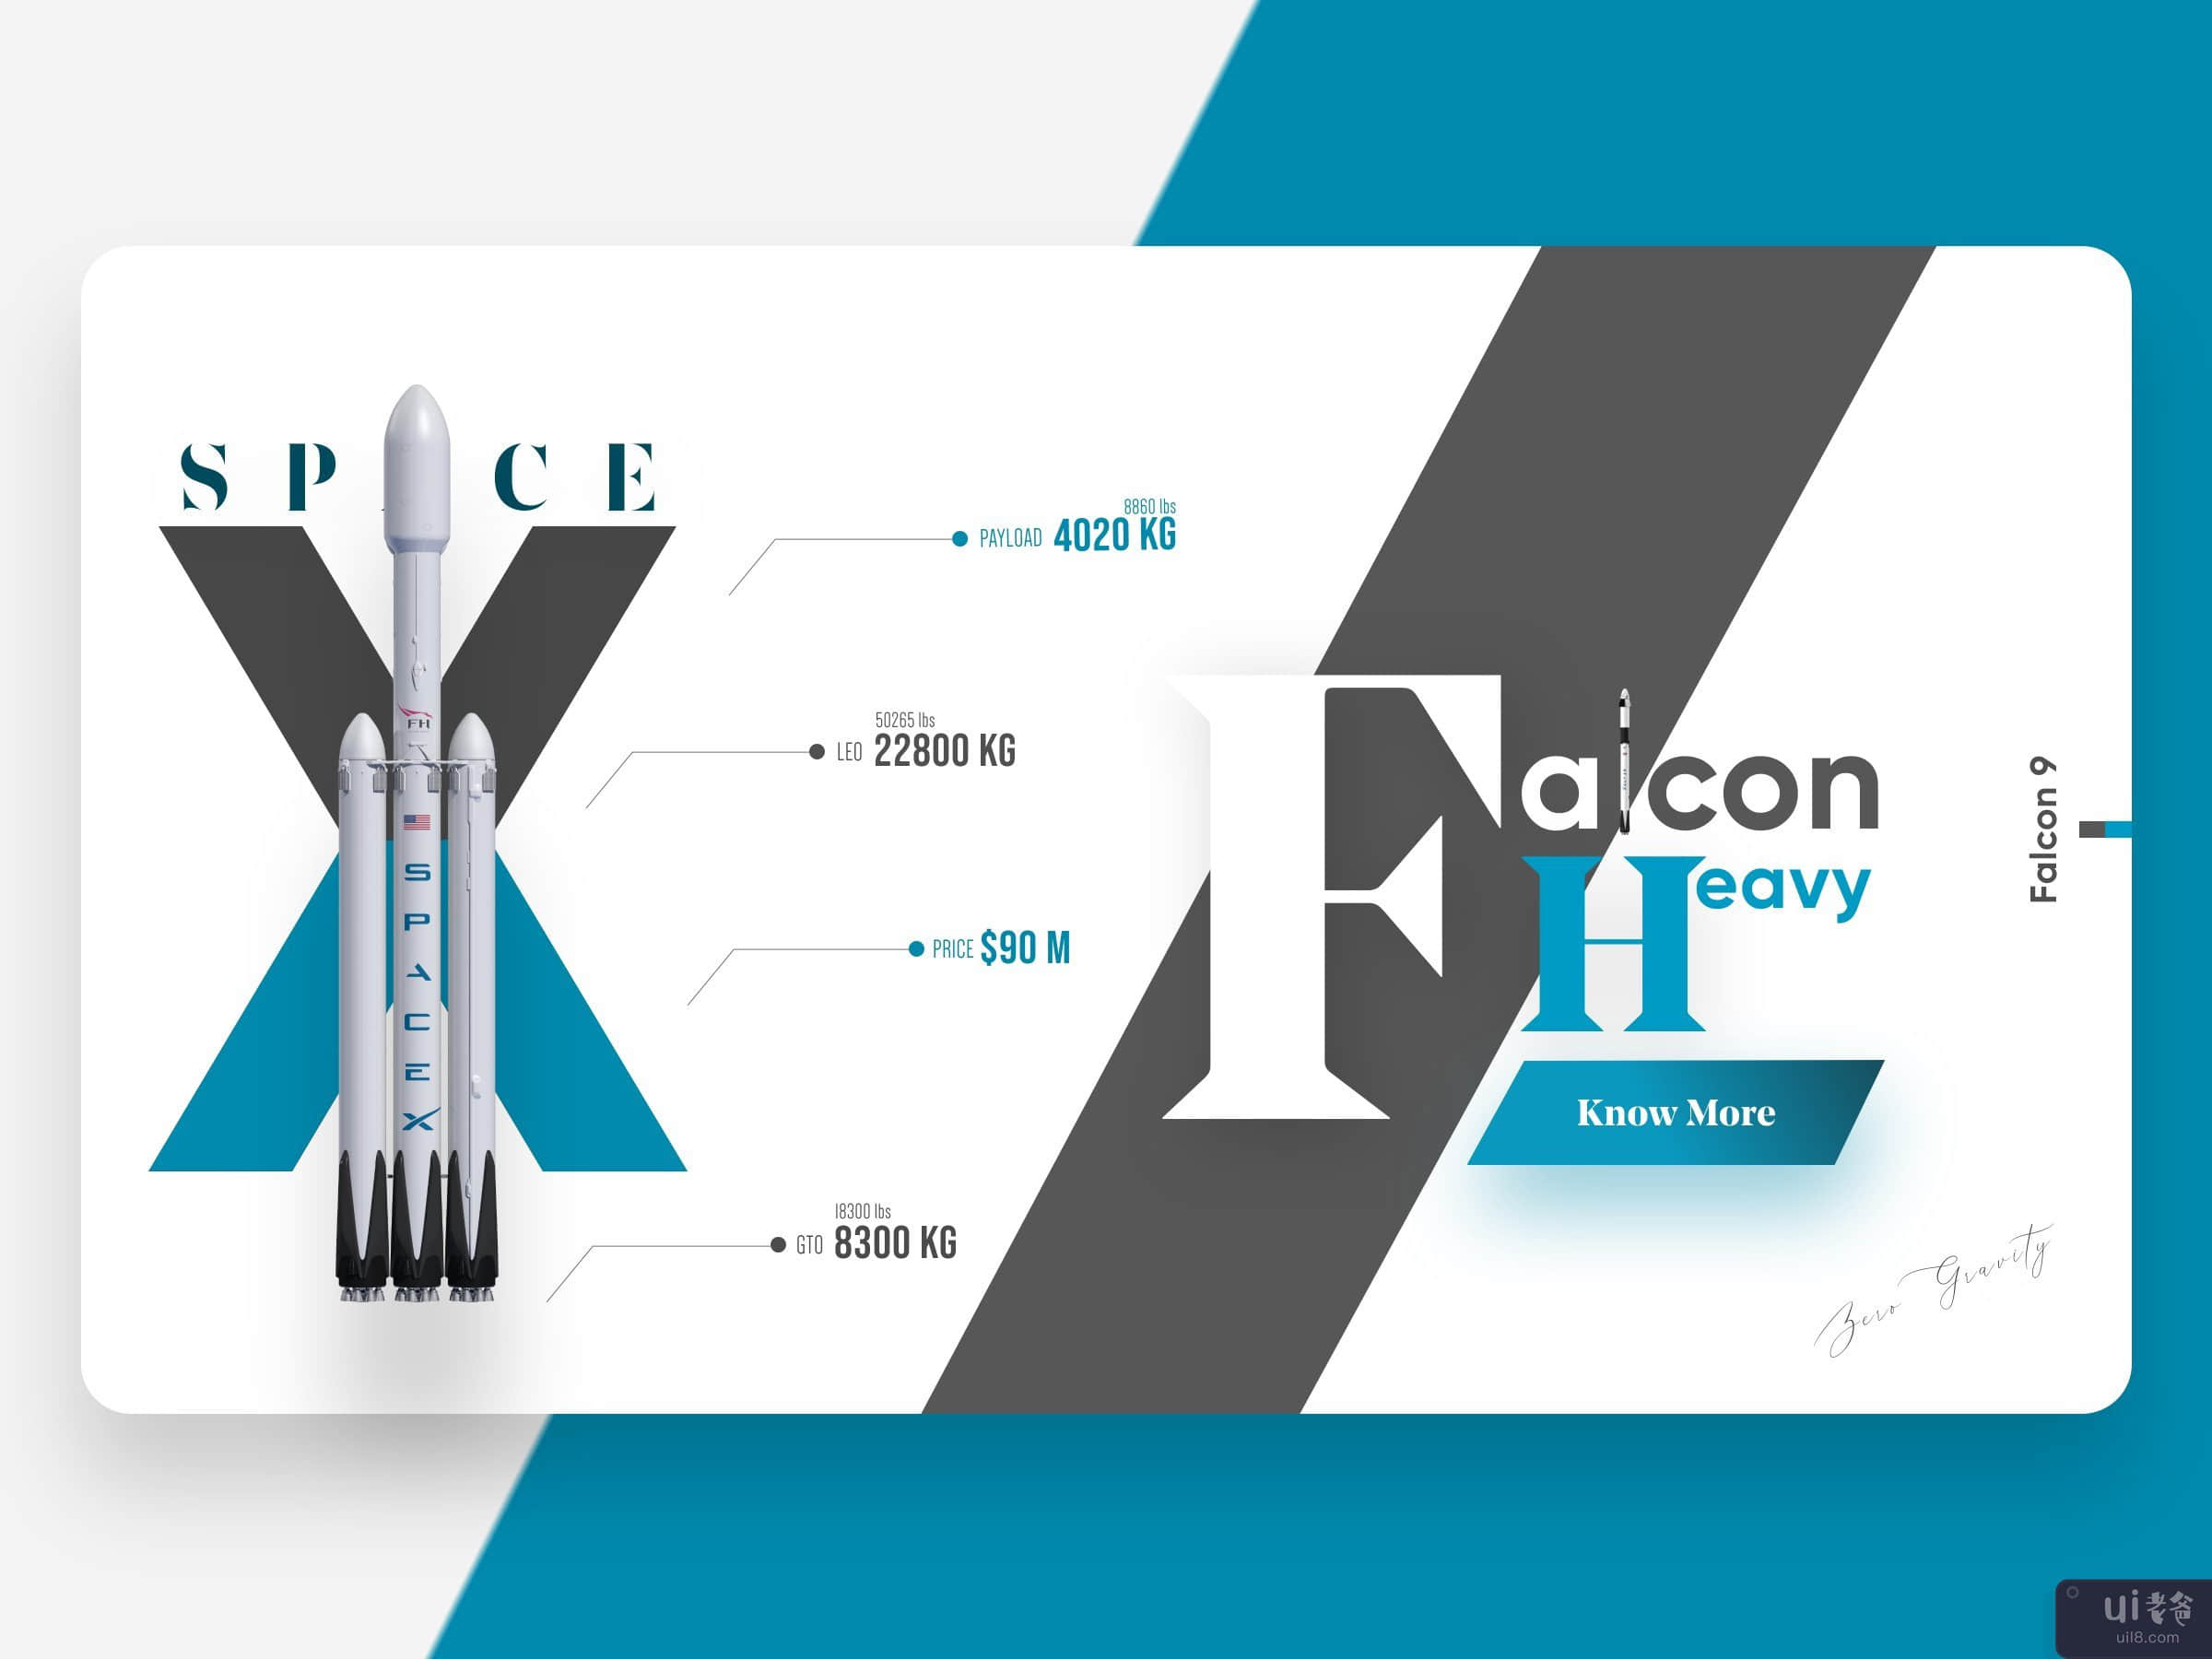 Space X 猎鹰火箭网页设计(Space X Falcon Rocket Web Design)插图